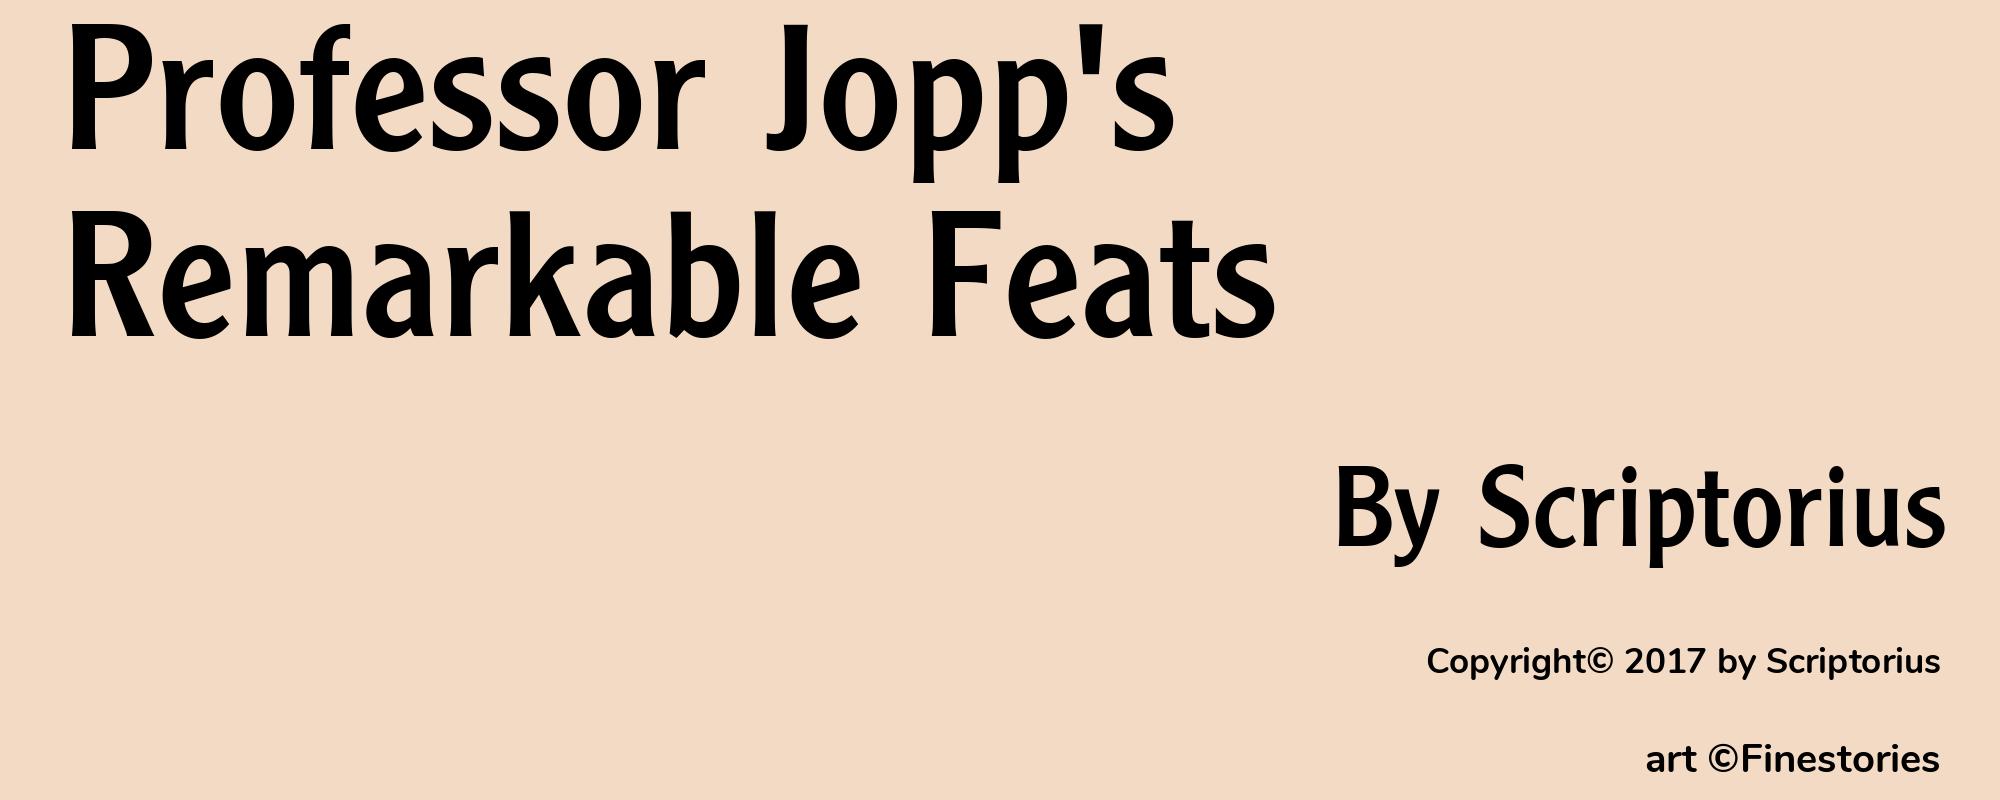 Professor Jopp's Remarkable Feats - Cover